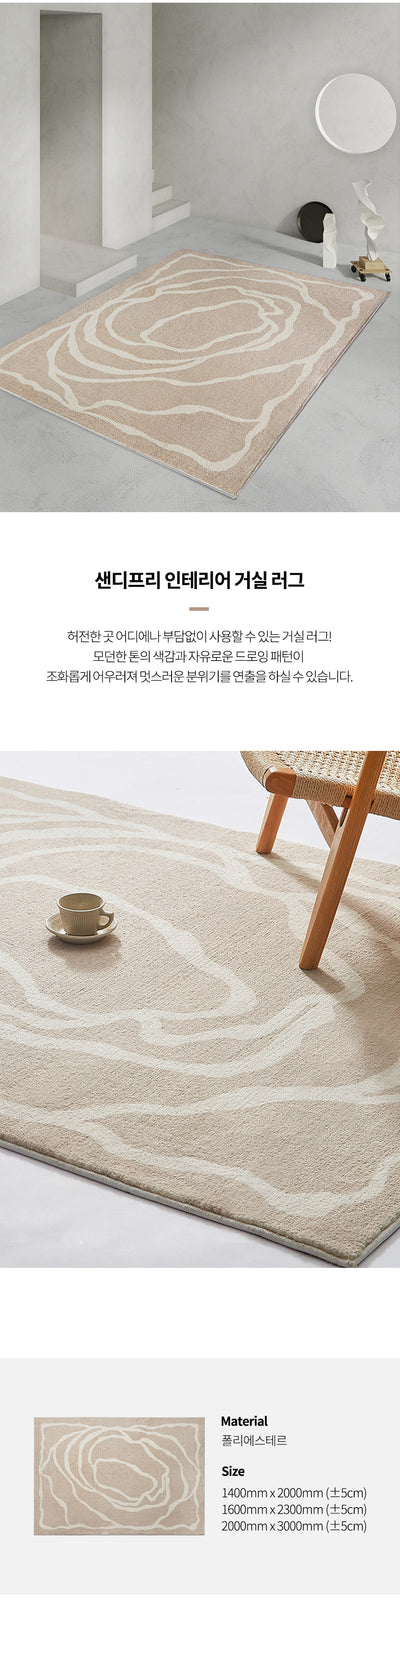 Sandy Free interior rug